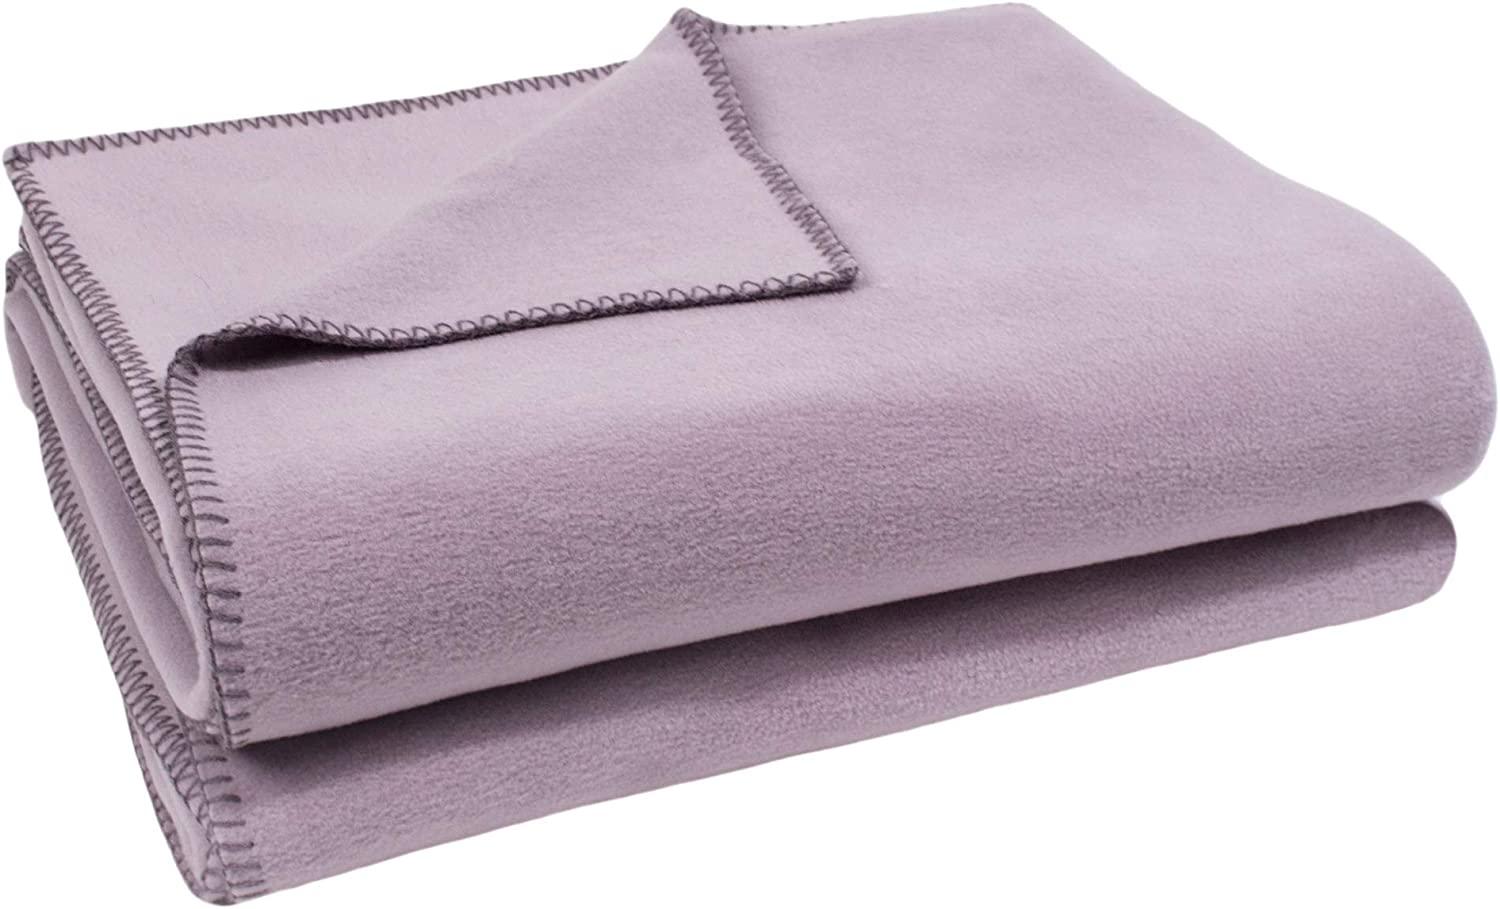 Zoeppritz Soft-Fleece pale lavender 220x240 103291-405 Bild 1